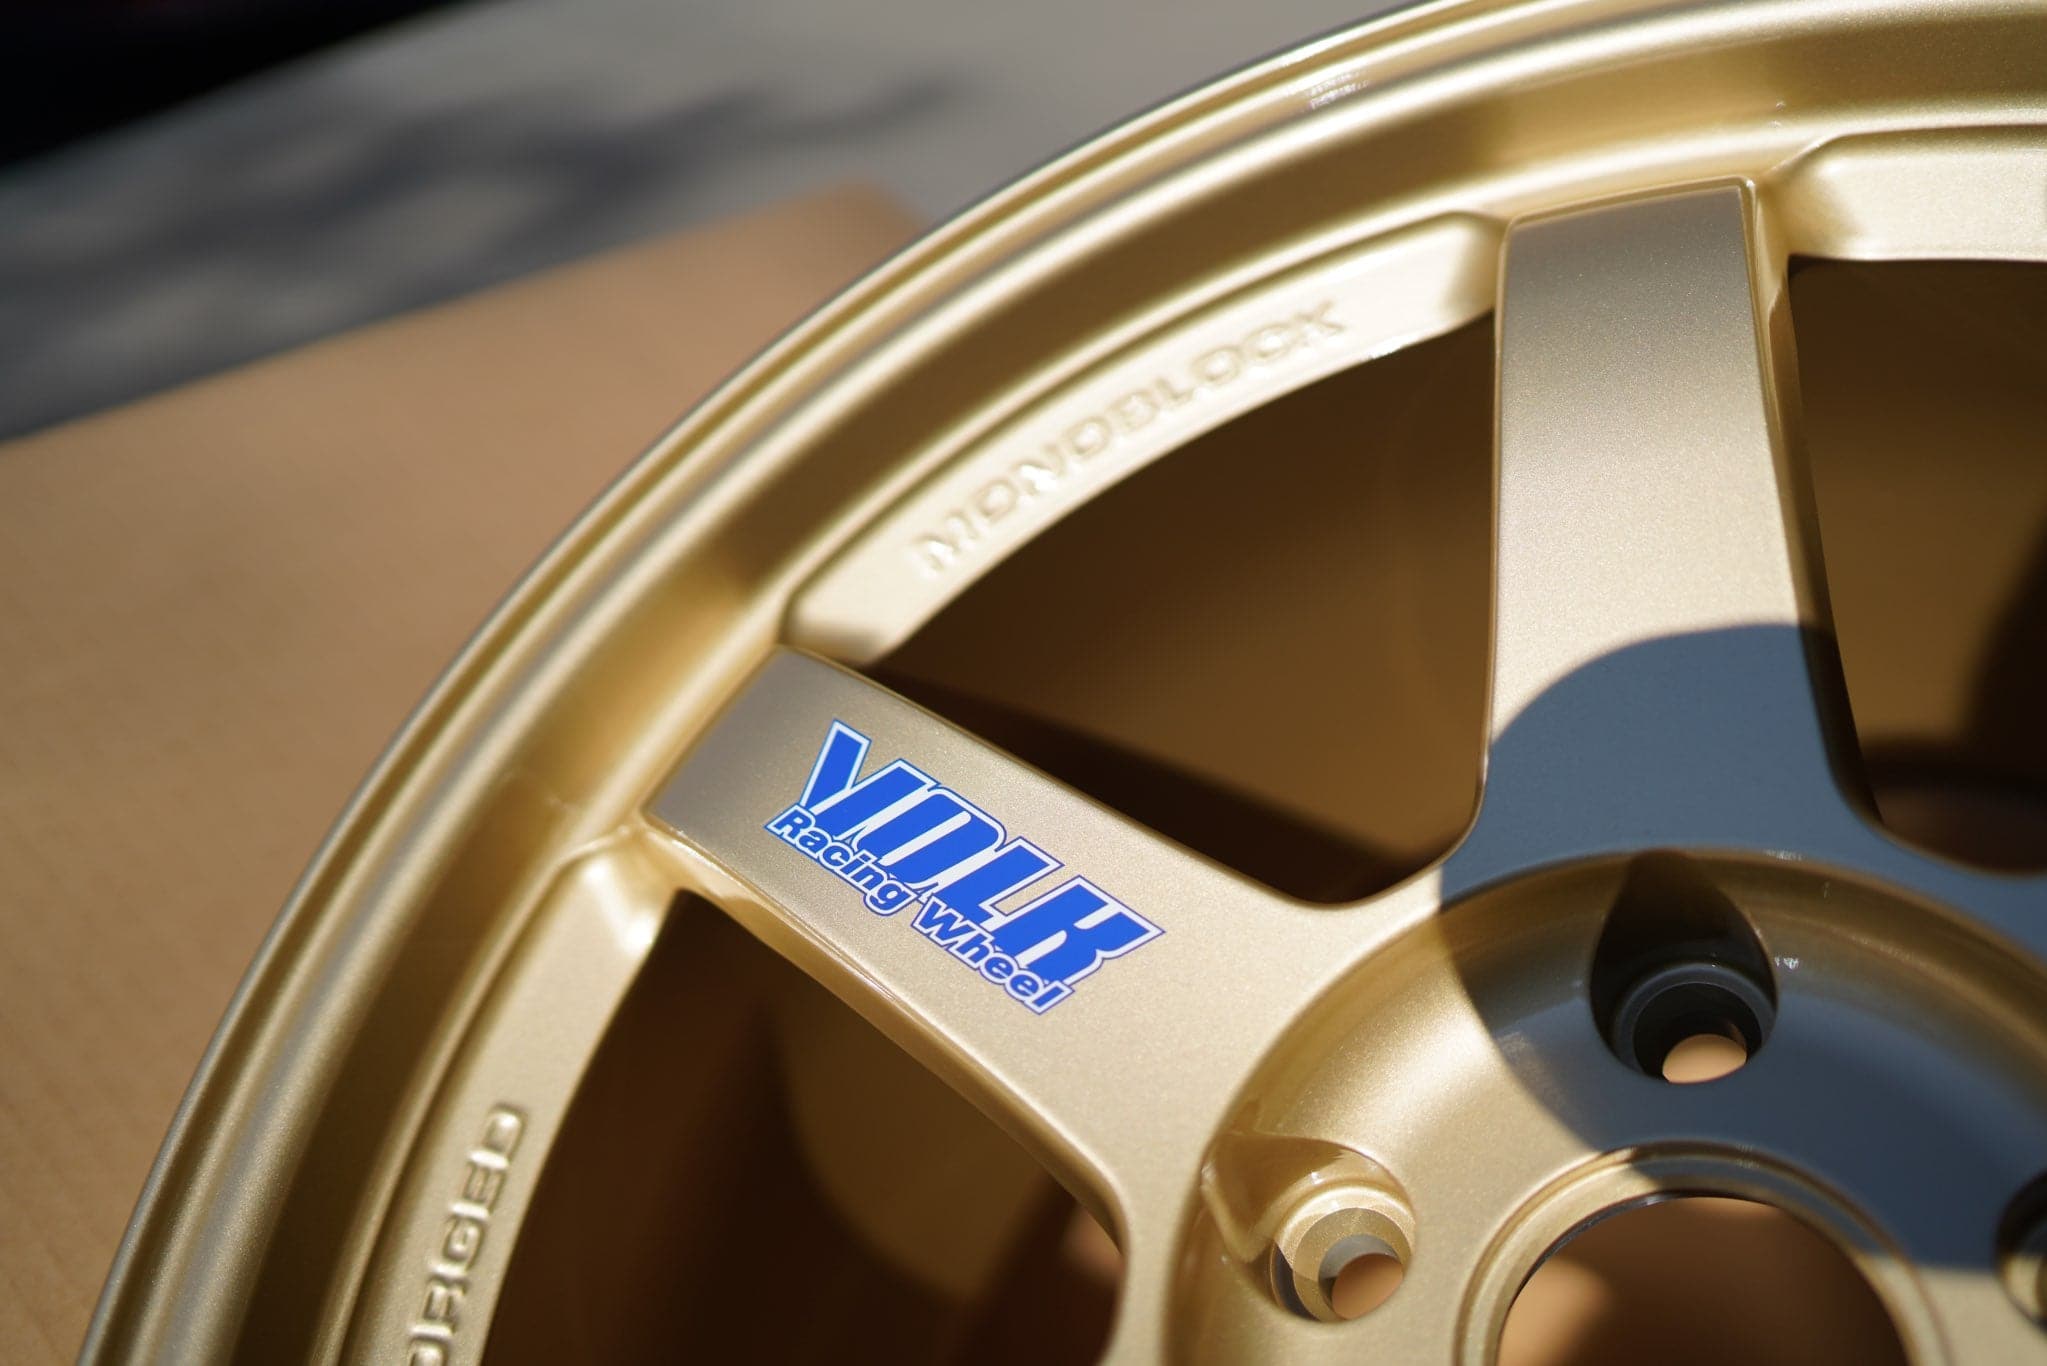 Volk Racing TE37 OG Wheel in 18x10" +41 5x120 in Gold for Civic Type R